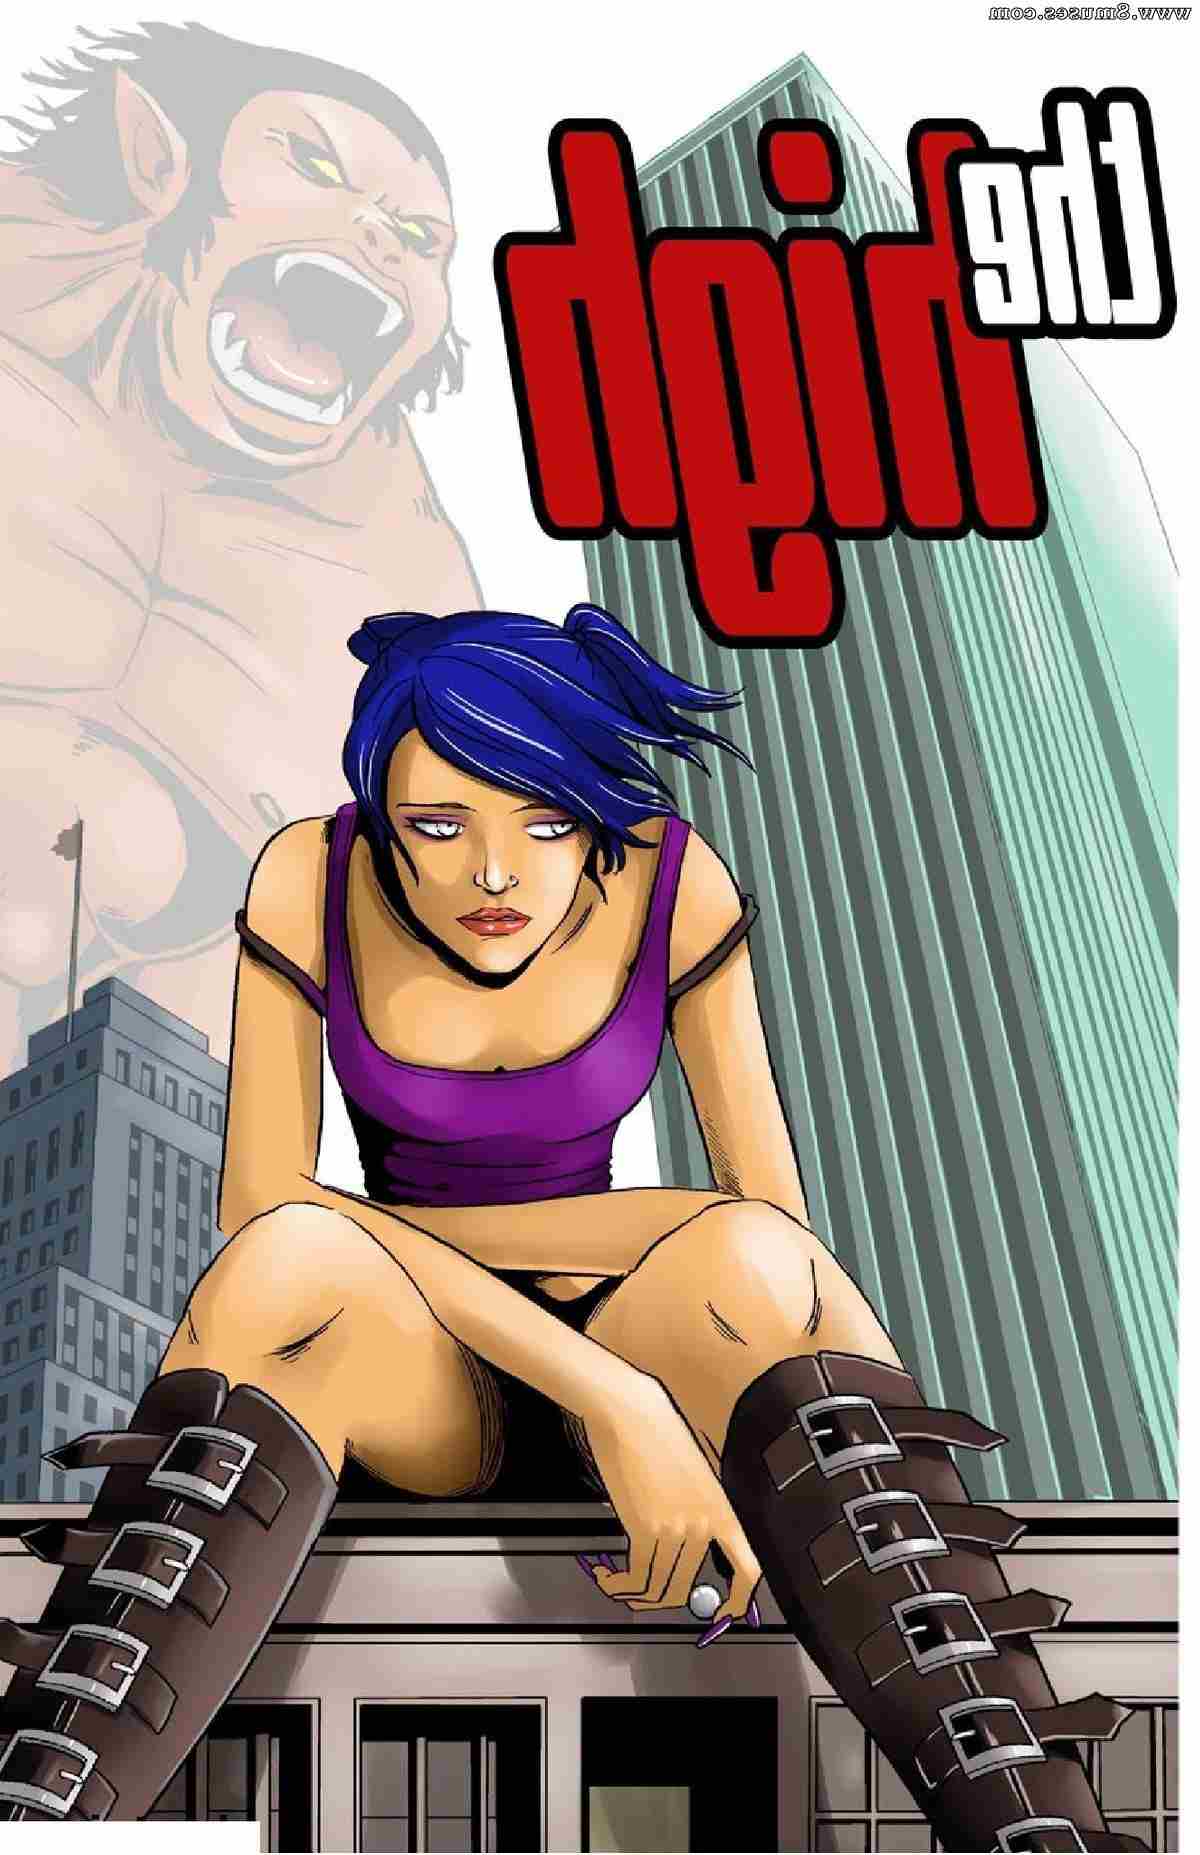 Giantess-Club-Comics/The-High The_High__8muses_-_Sex_and_Porn_Comics.jpg